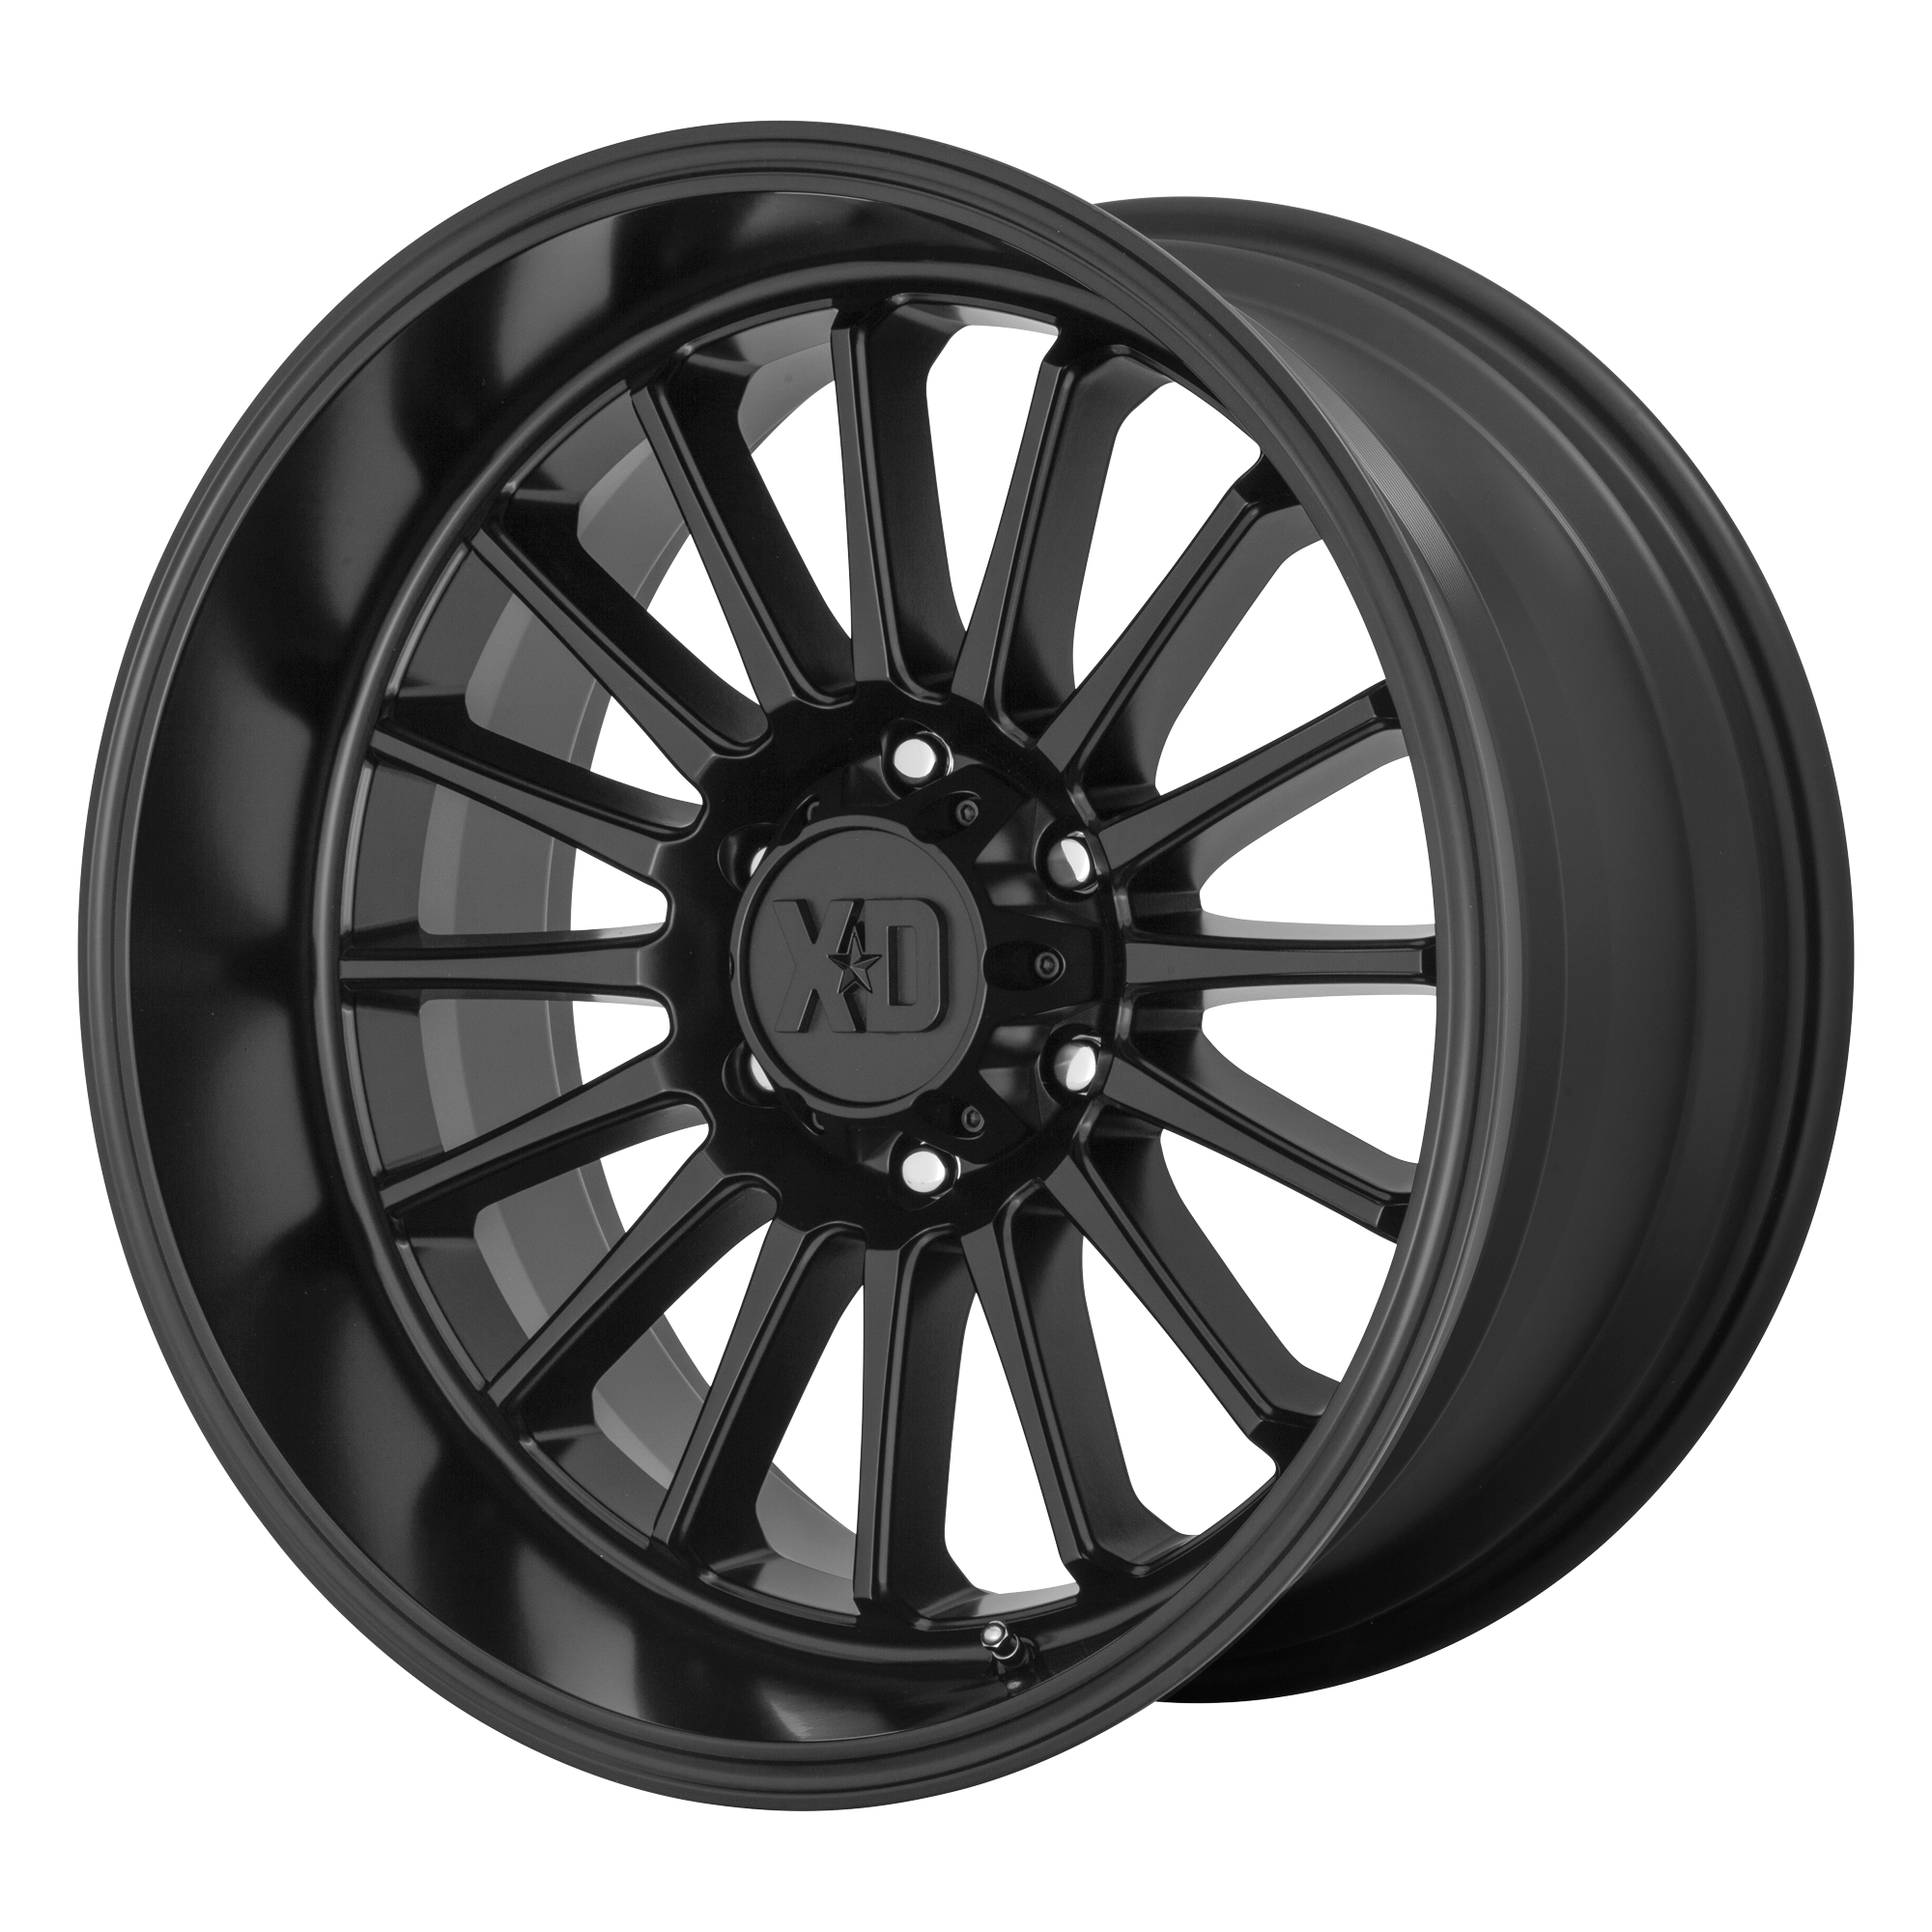 XD 20"x9" Non-Chrome Satin Black Custom Wheel ARSWCWXD85729087700